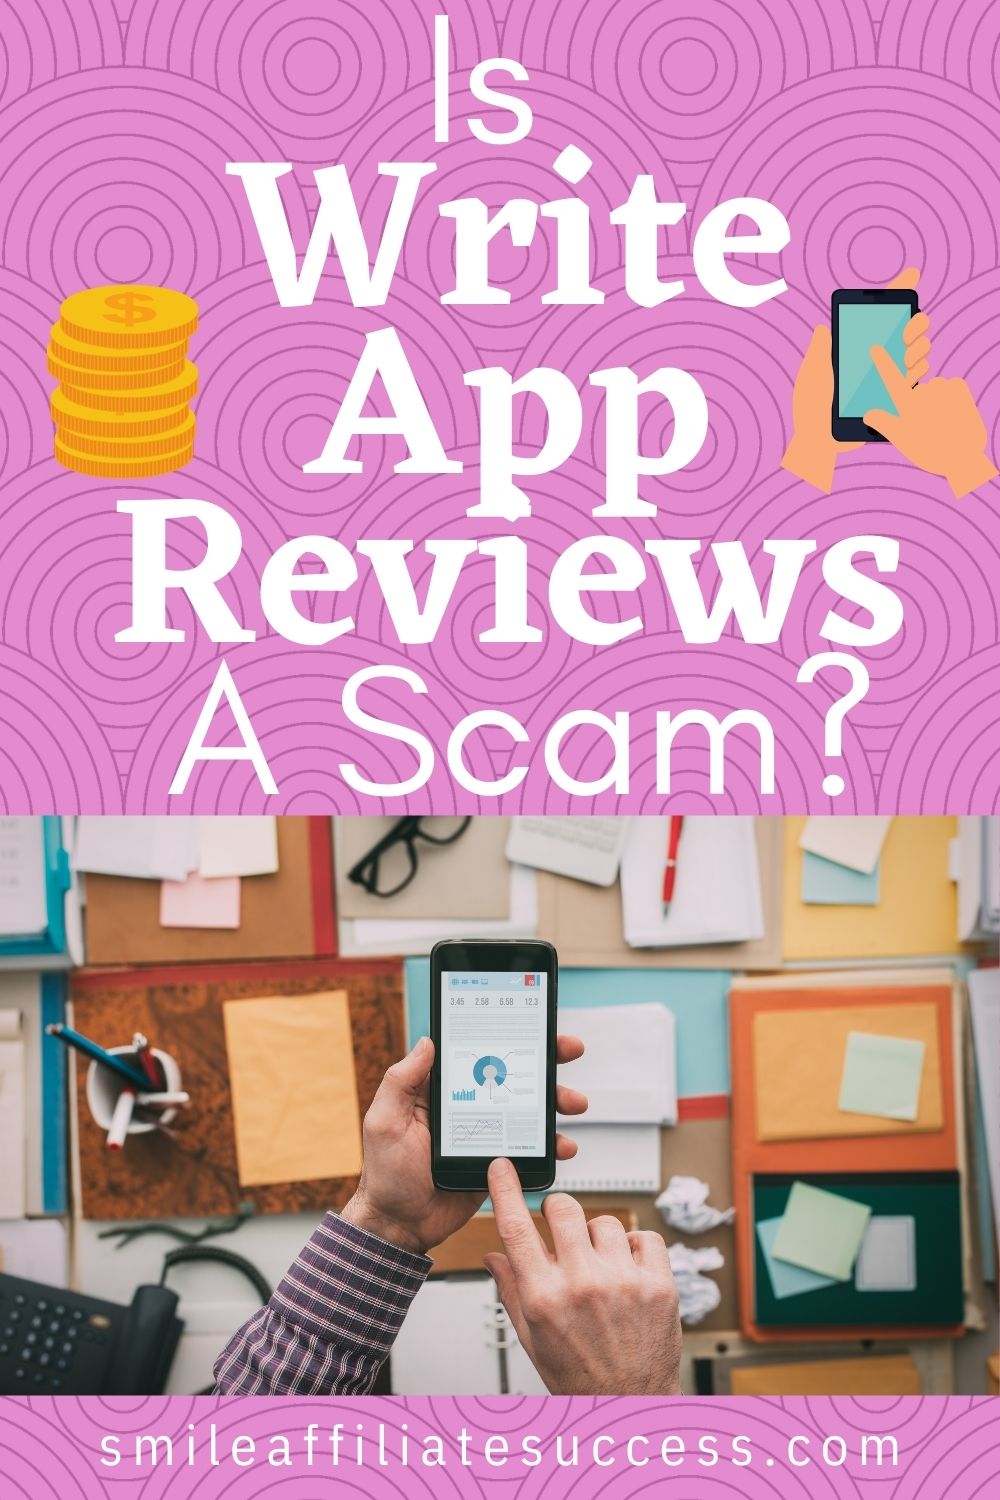 Is Write App Reviews A Scam?